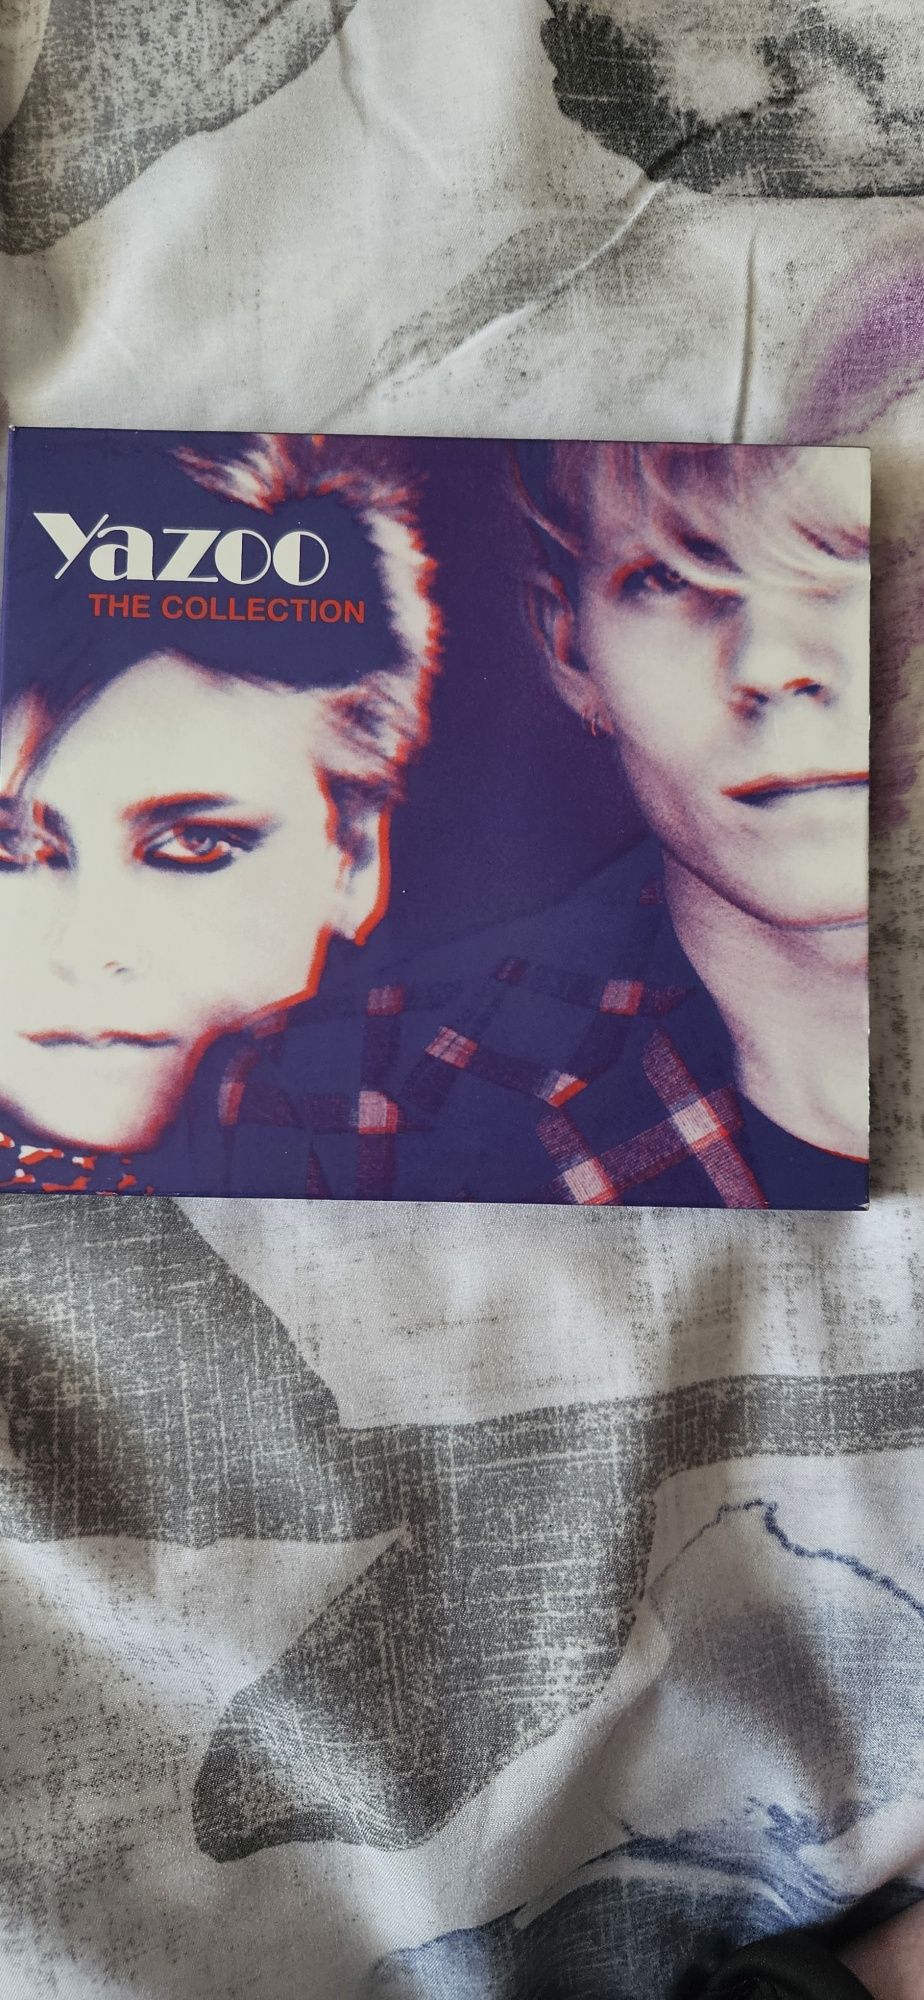 Yazoo The Collection 2 CD